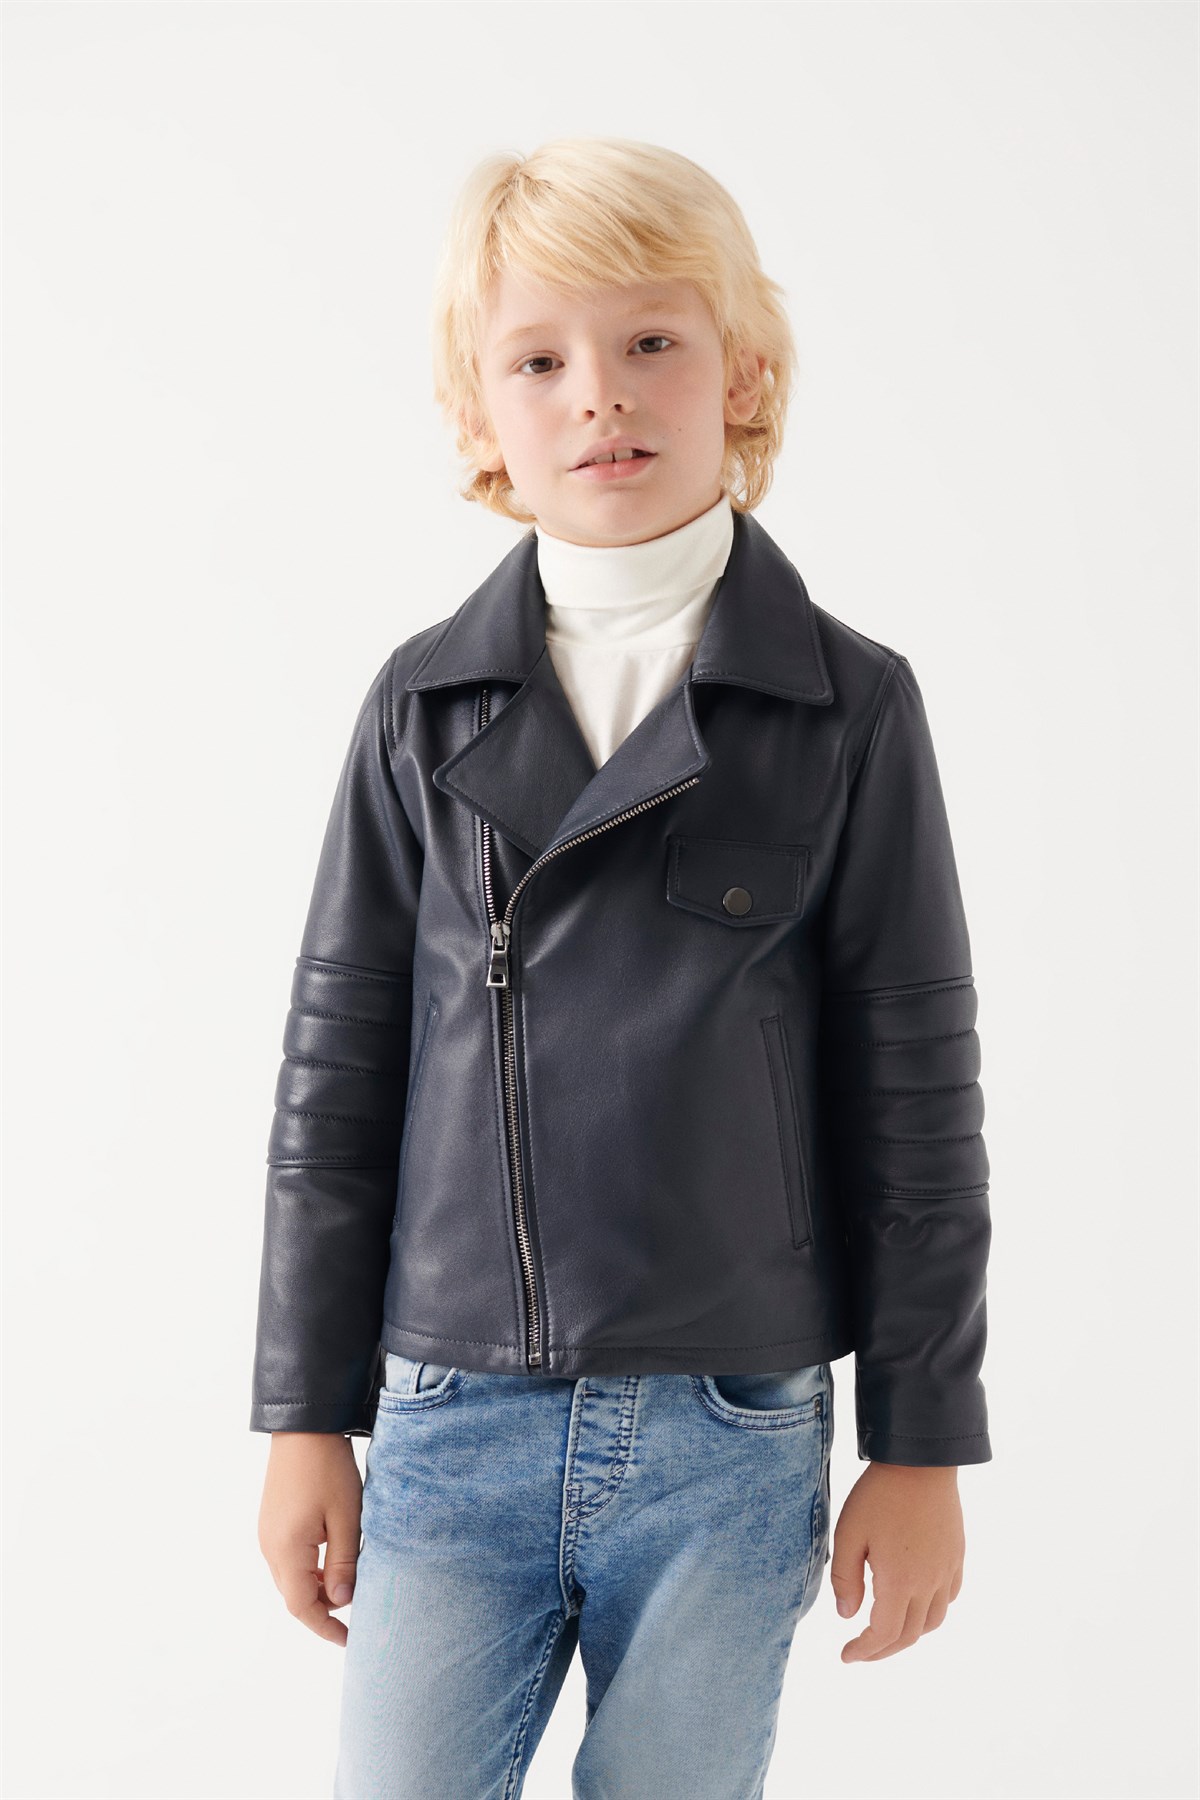 JONNY Boys Navy Blue Leather Jacket | Boys Leather and Shearling Jacket &  Coat